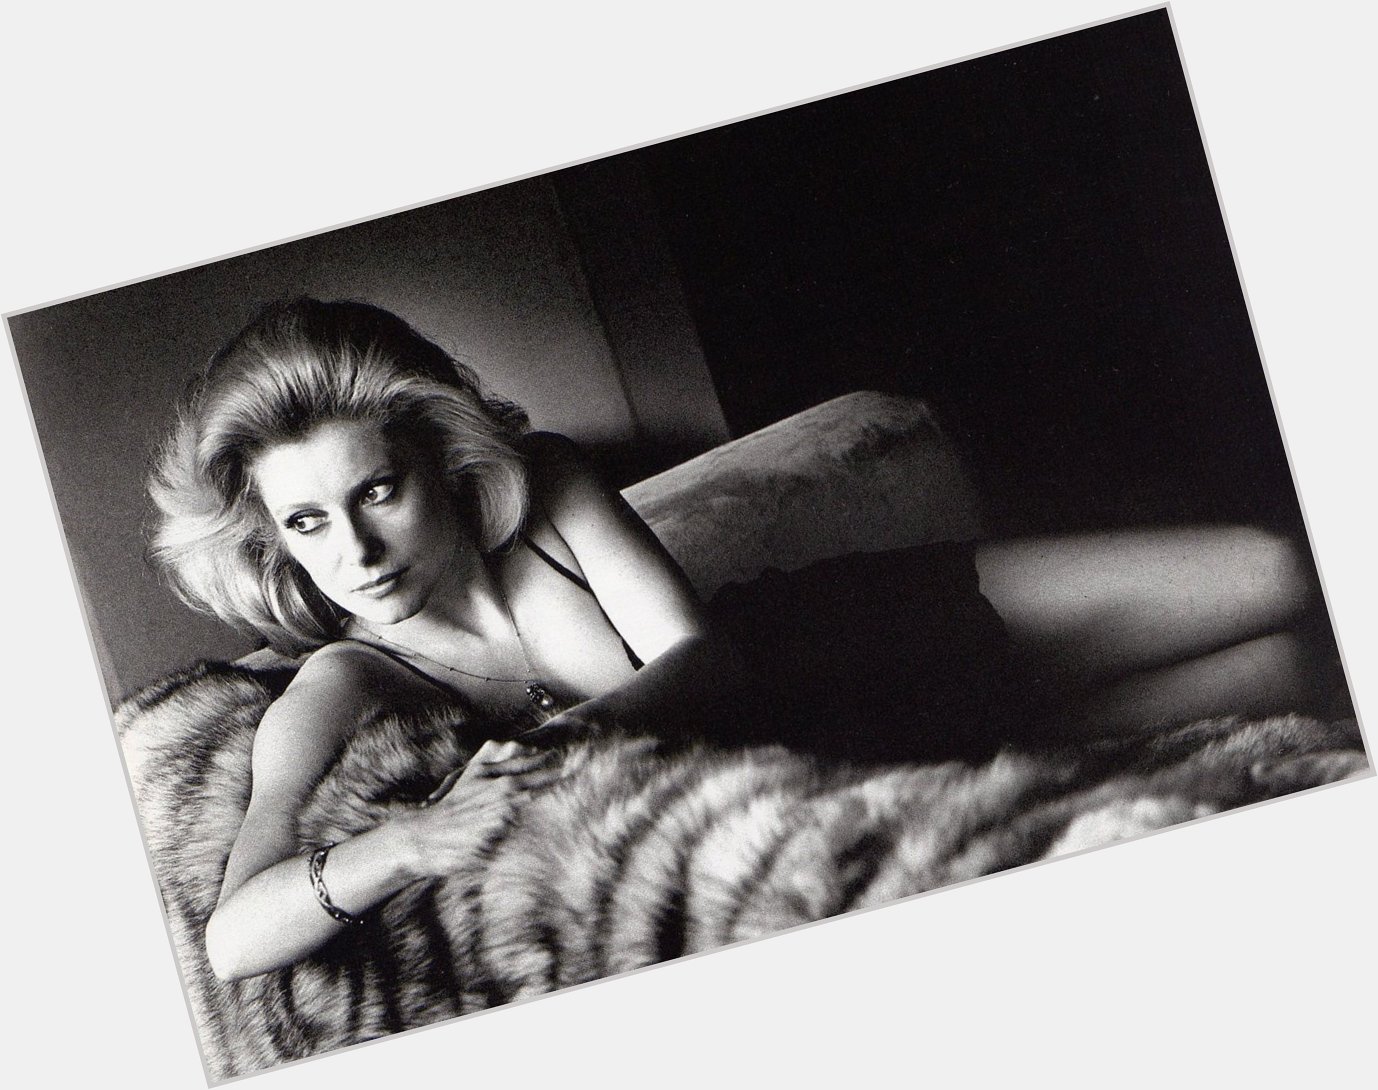 \" Catherine Deneuve photographed by Helmut Newton   1976.  Happy birthday Miss Deneuve. 